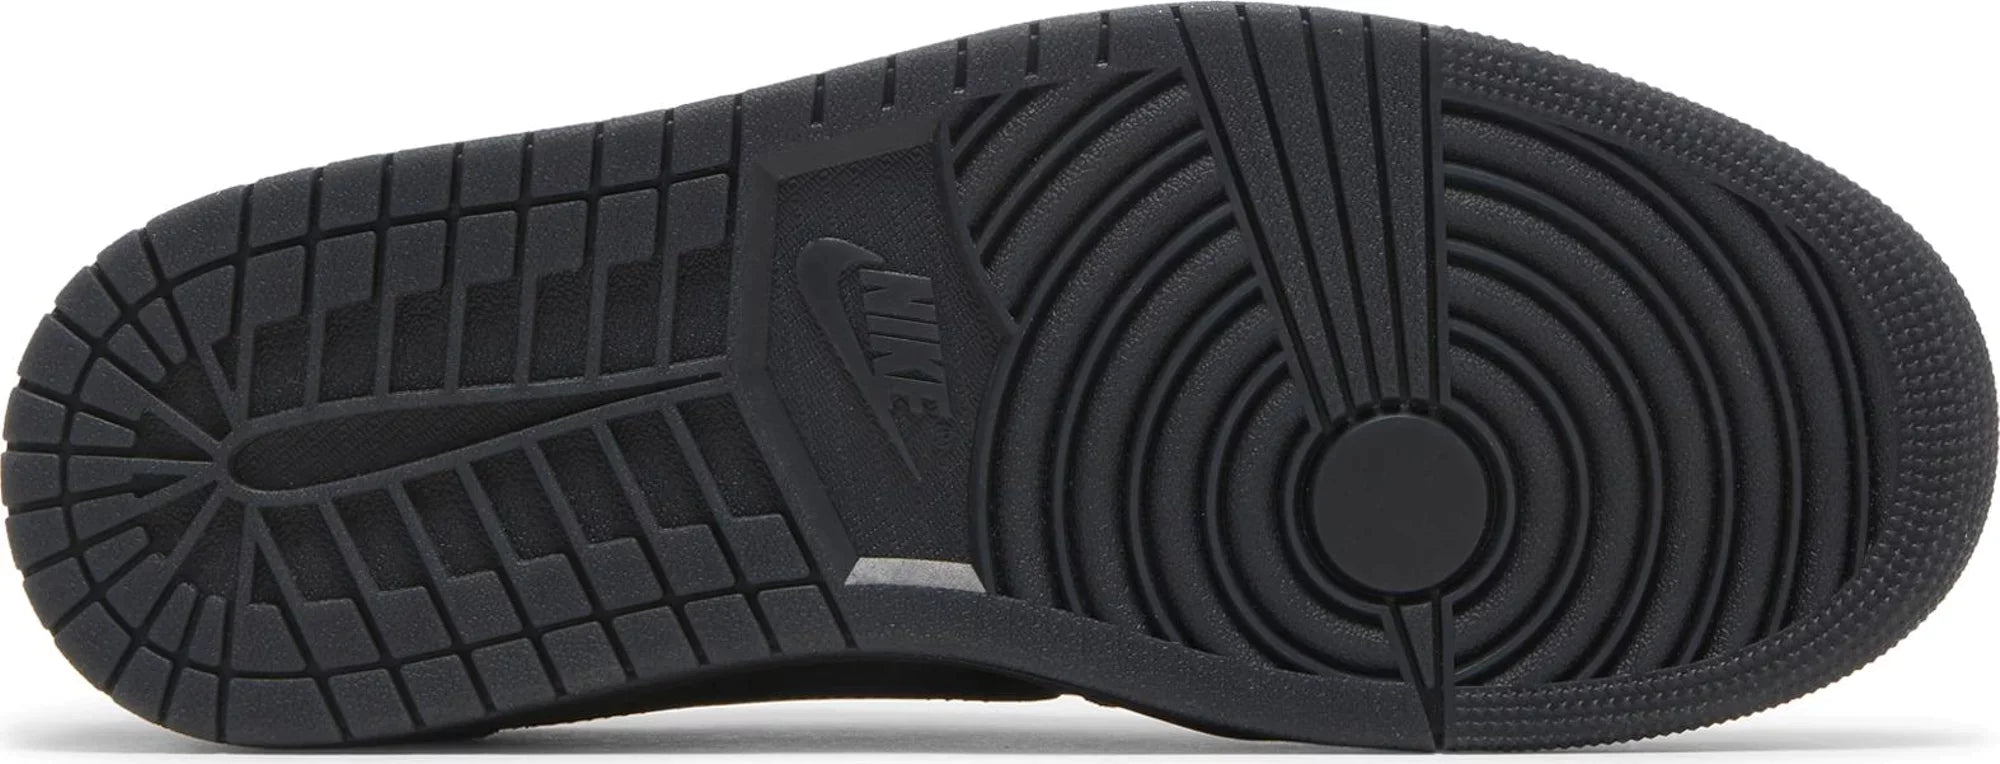 Travis Scott x Air Jordan 1 Low OG SP 'Black Phantom' Sneakers for Men - GENUINE AUTHENTIC BRAND LLC